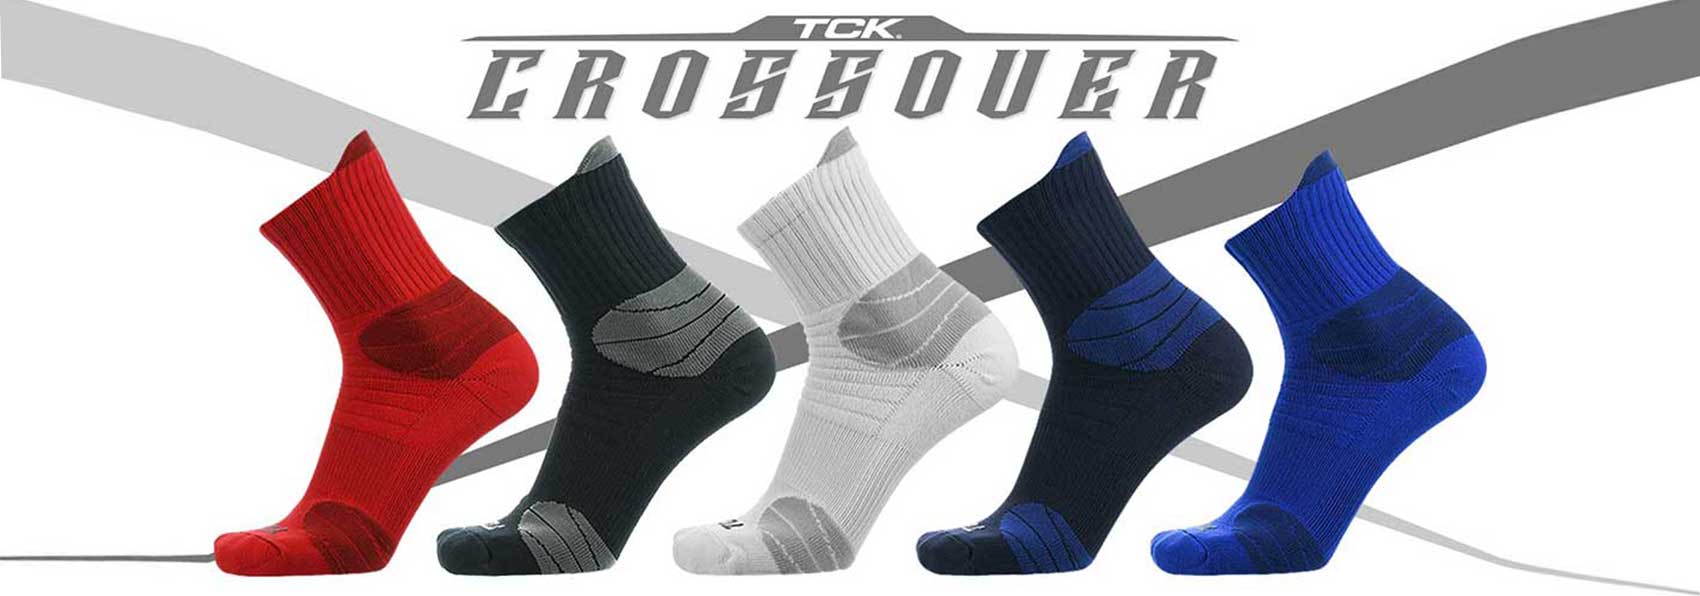 TCK (Twin City Knitting) Crossover Socks